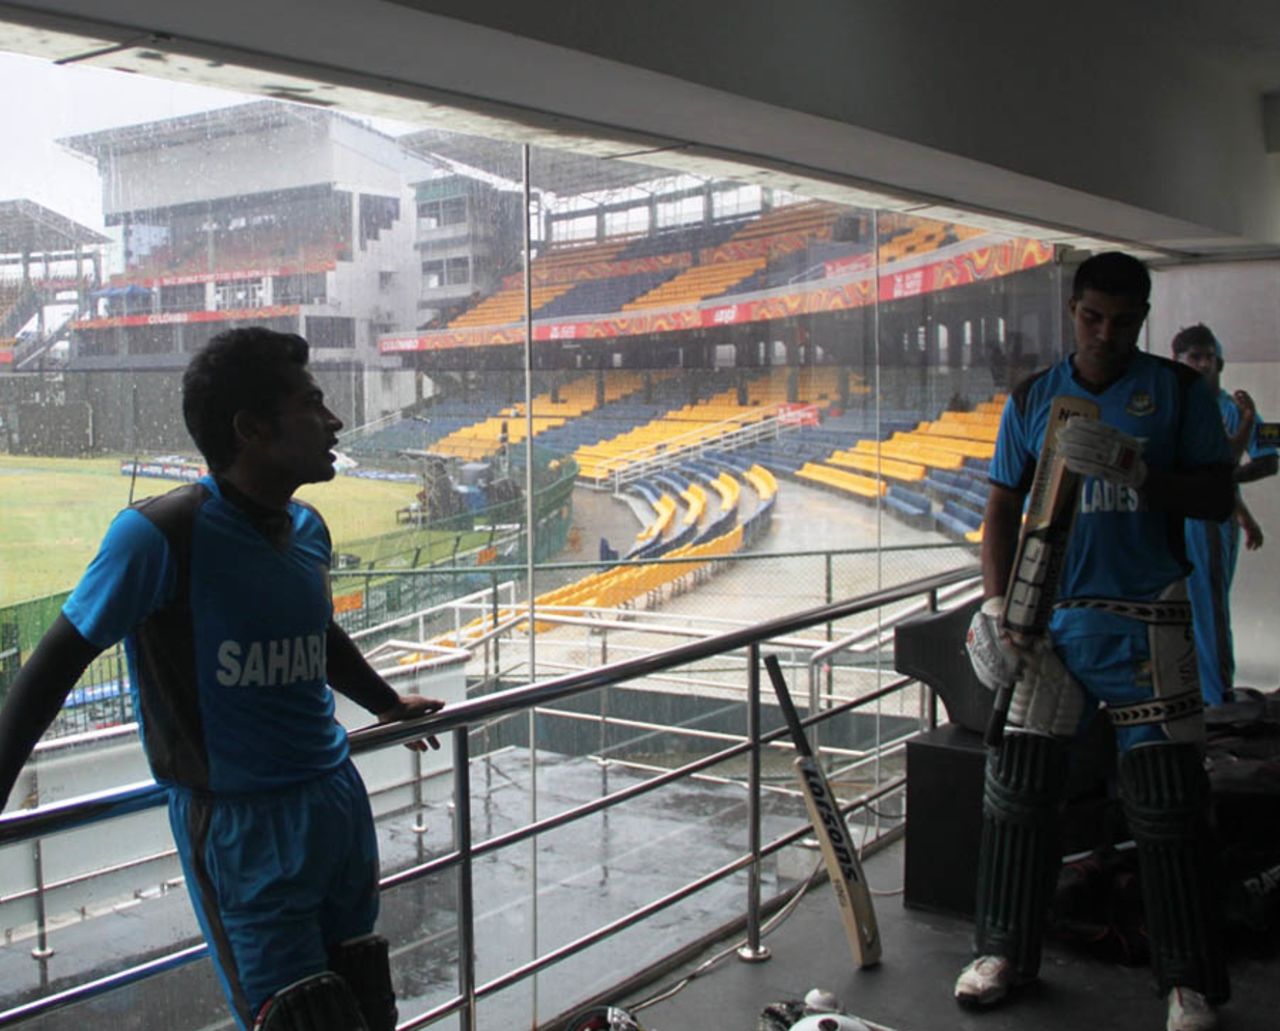 Mushfiqur Rahman and Ziaur Rahman stay indoors due to rain, Colombo, September 16, 2012